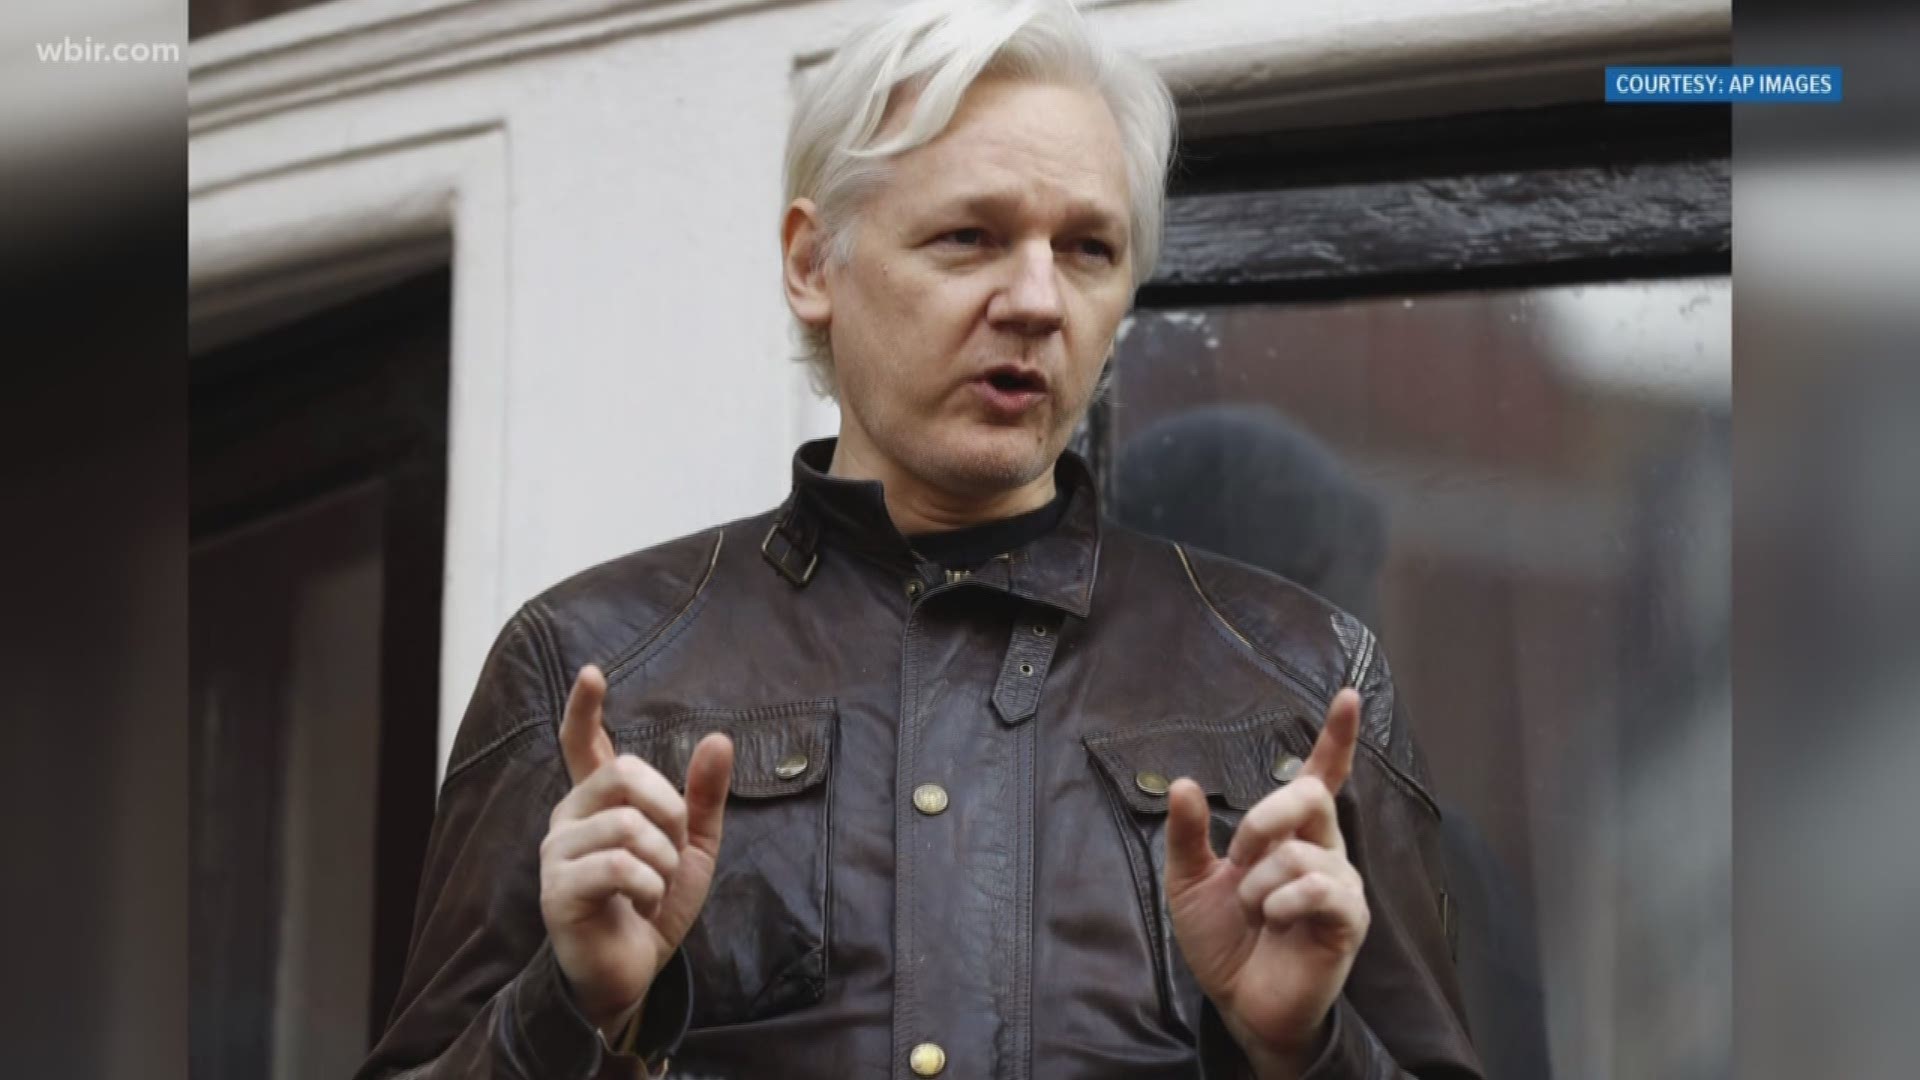 Wikileaks founder Julian Assange at the Ecuadorian embassy in London.